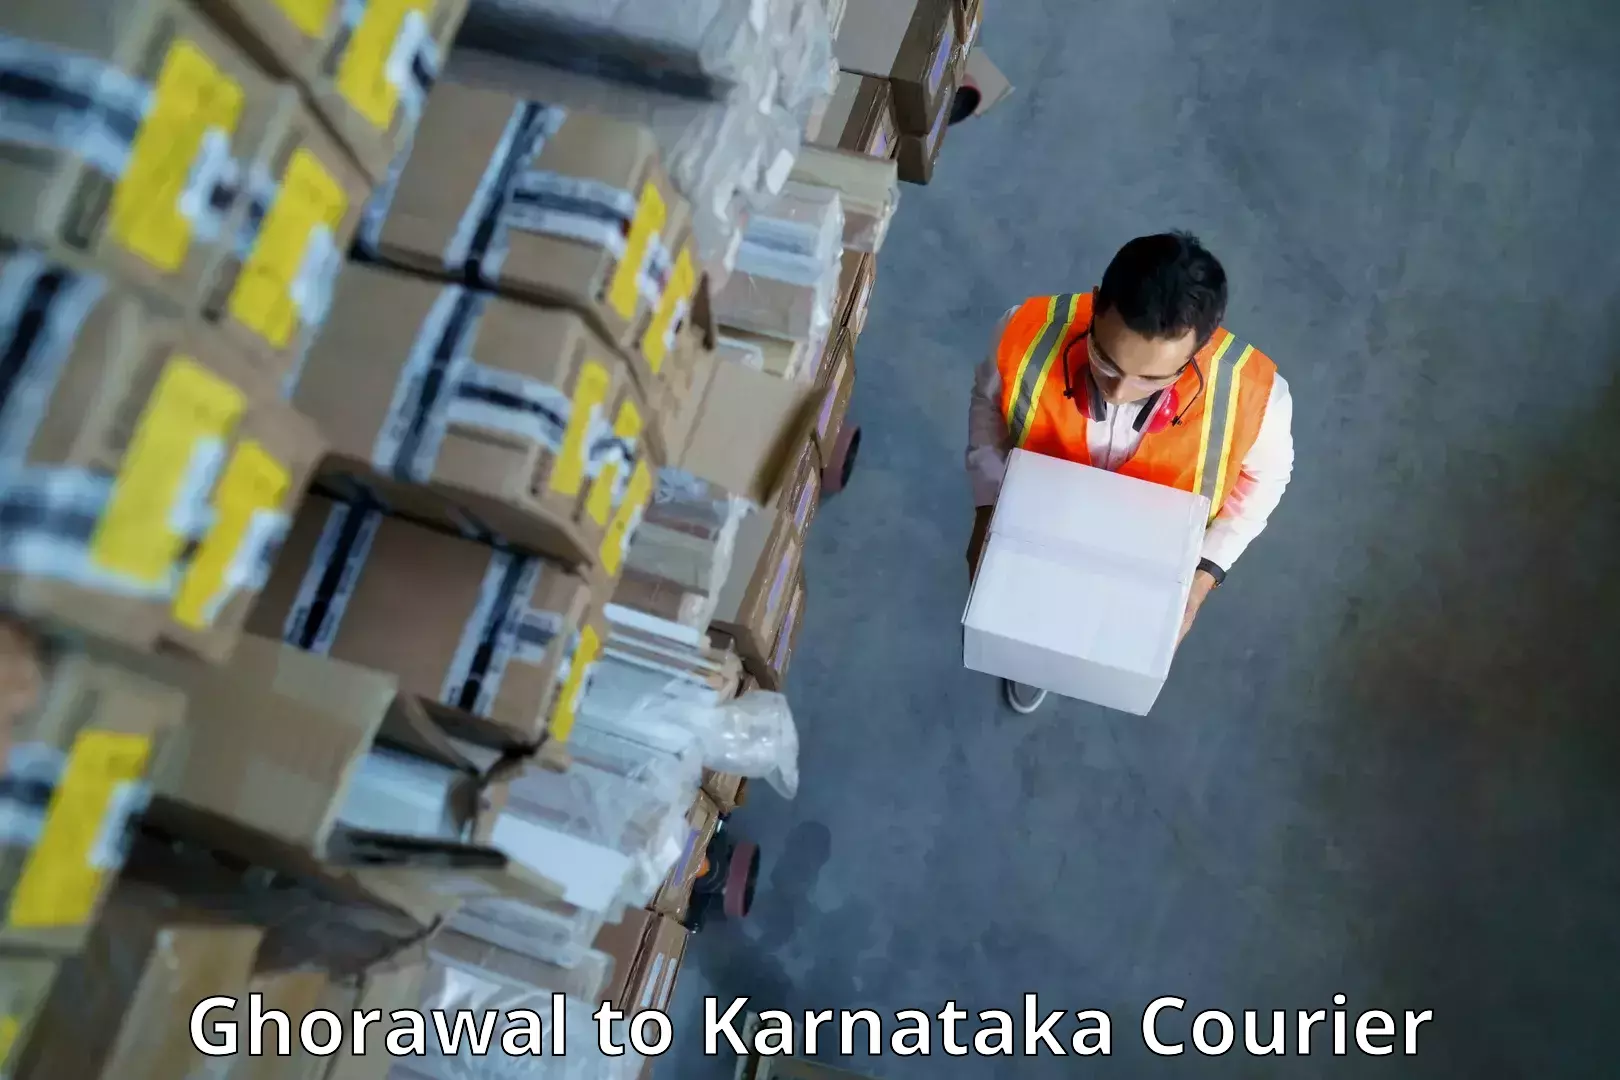 Budget-friendly shipping Ghorawal to Bangalore